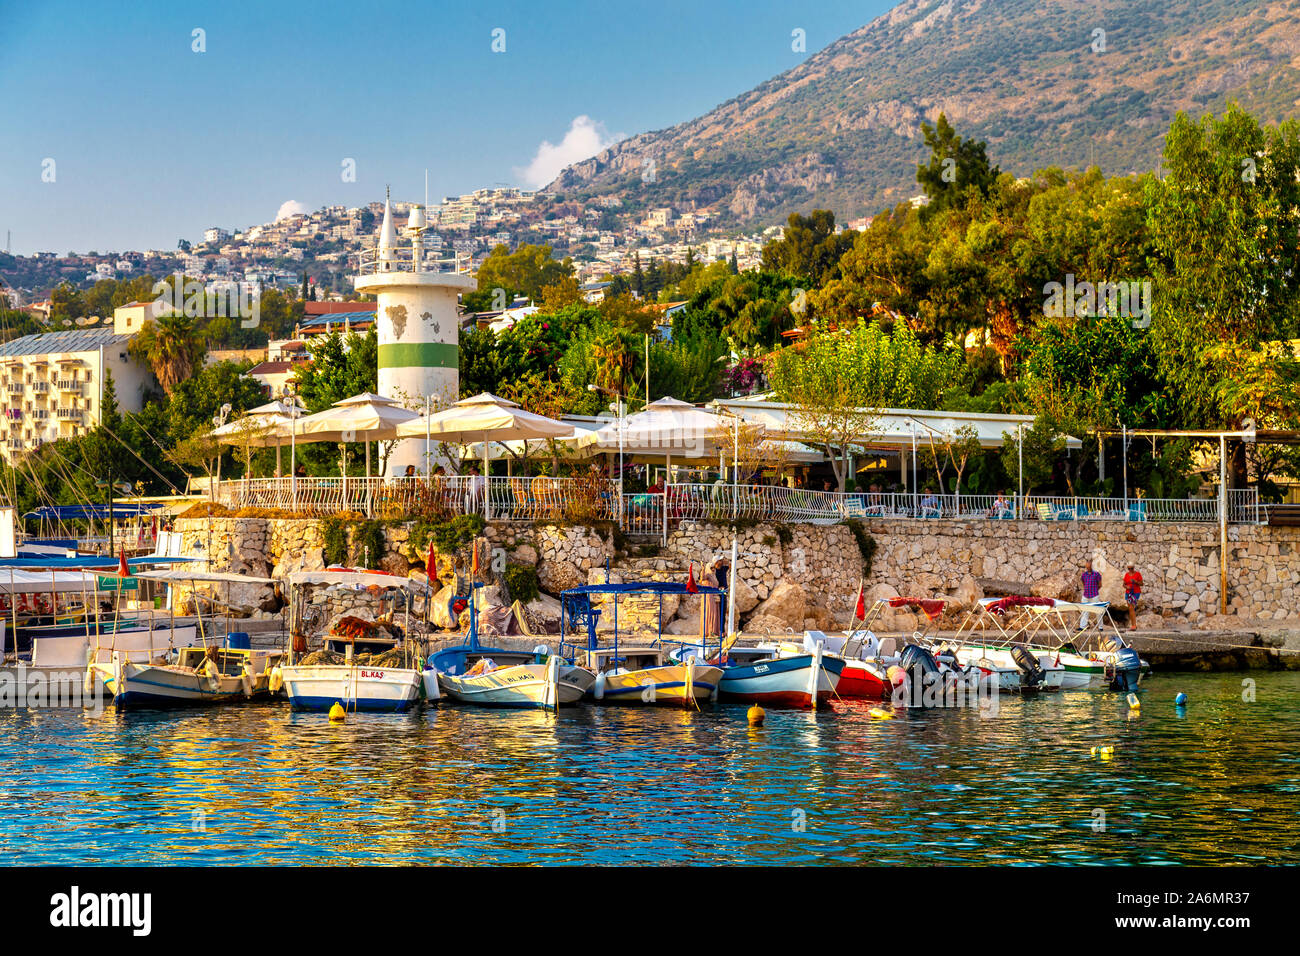 View of the marina and boats in Kalkan, Turkish Riviera, Turkey Stock Photo